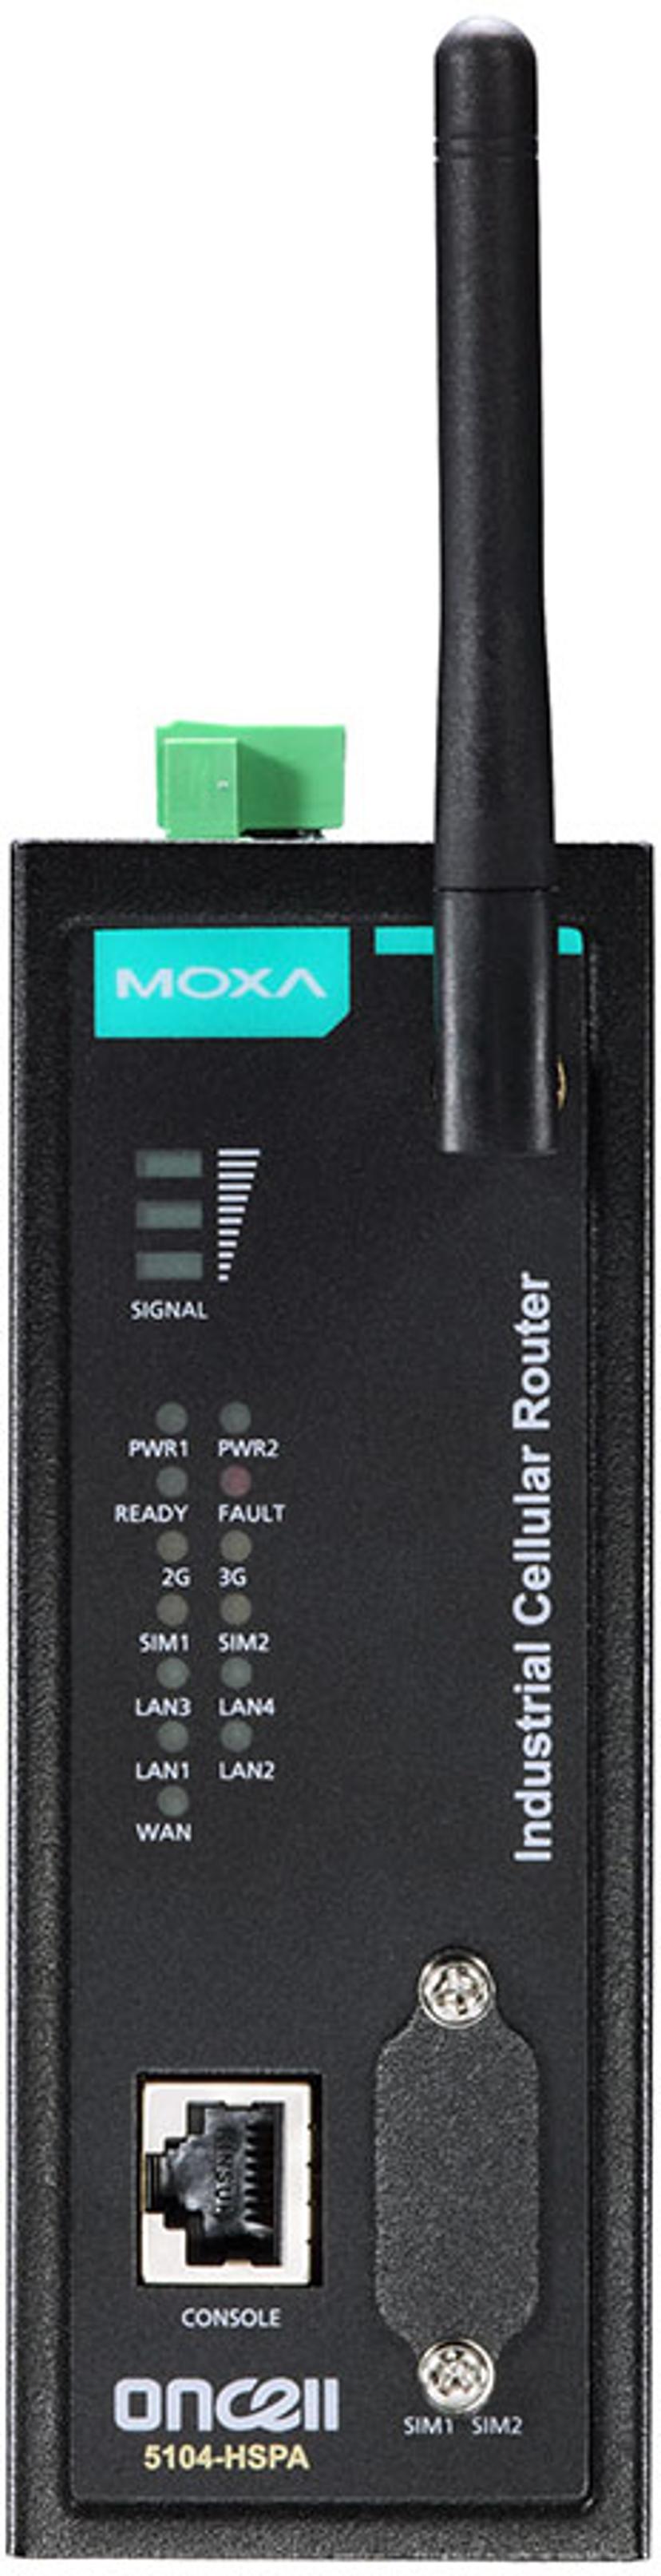 Moxa OnCell 5104-HSPA, teollinen 3G-reititin